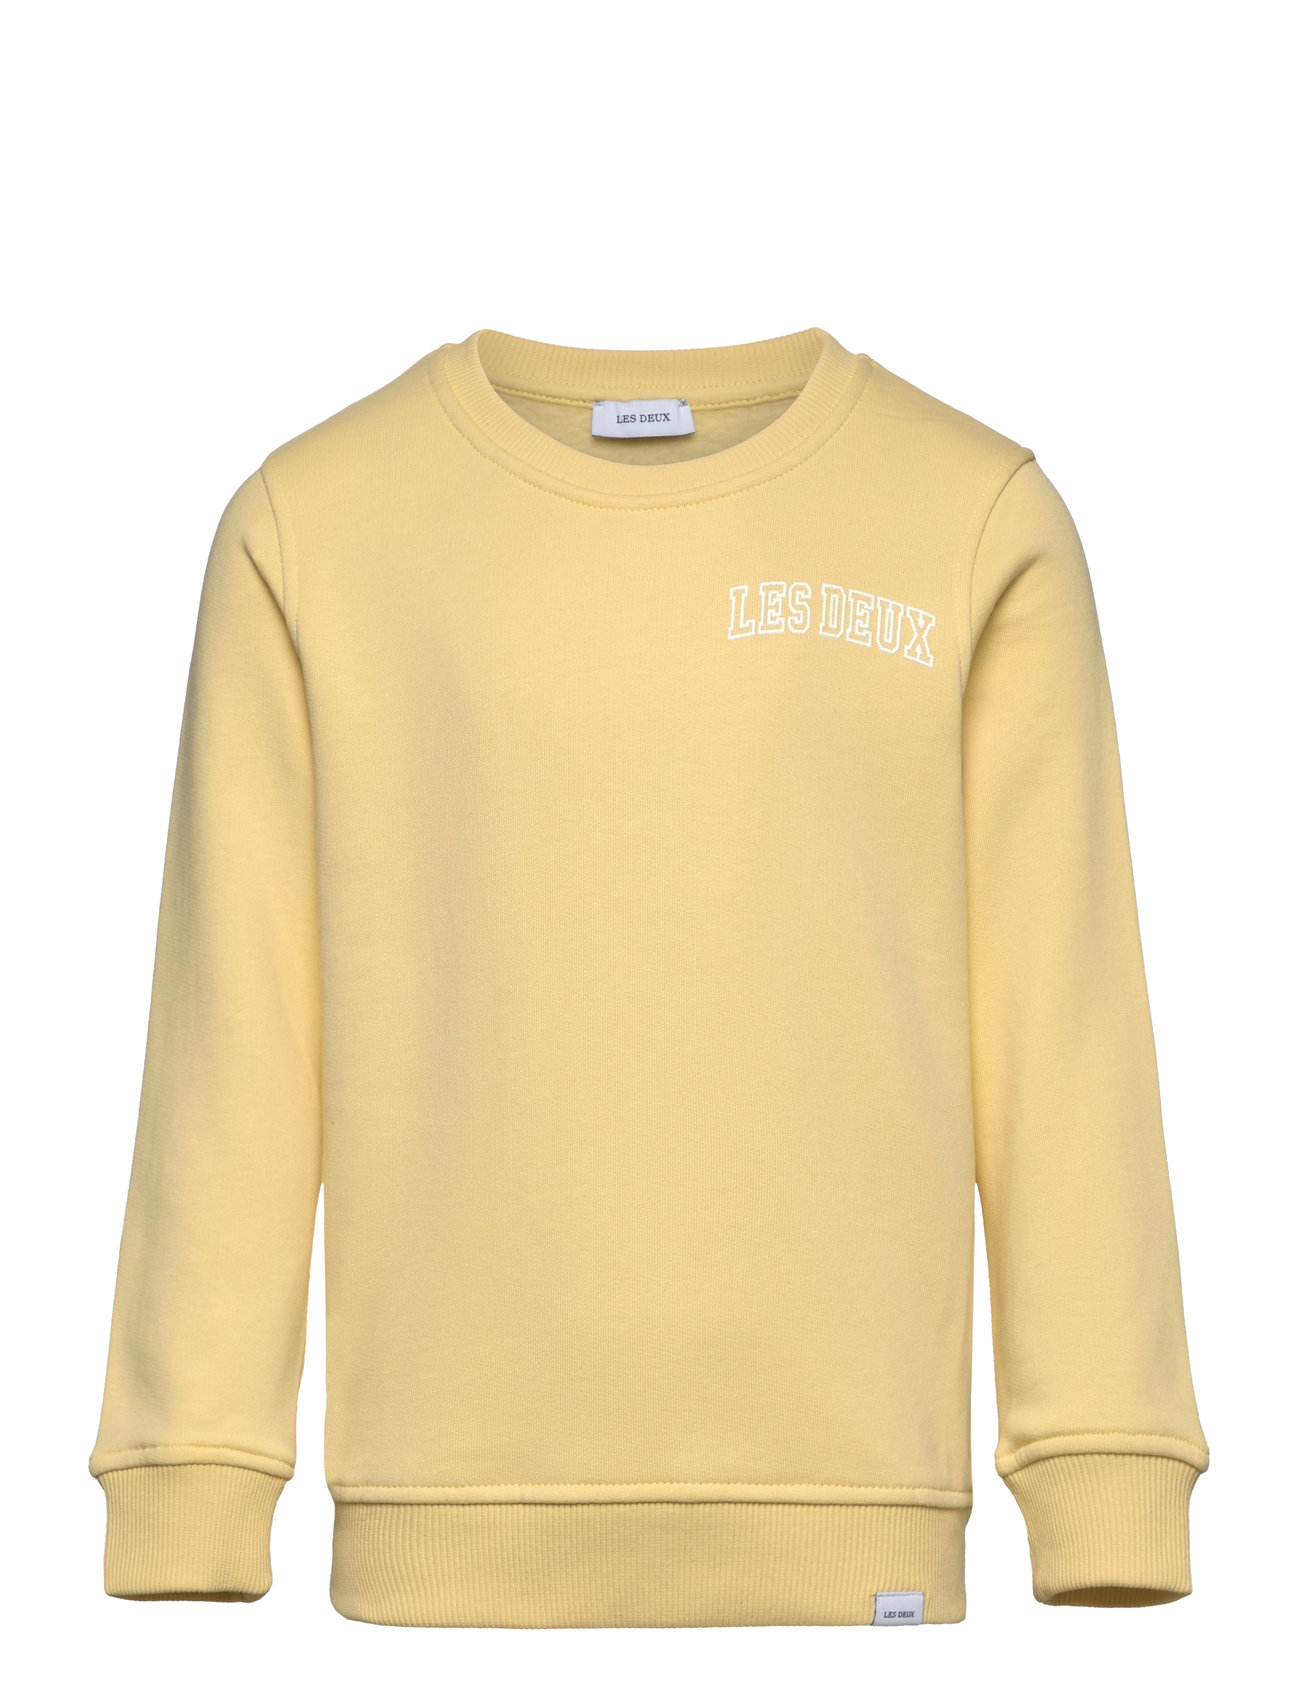 Blake Sweatshirt Kids Tops Sweatshirts & Hoodies Sweatshirts Yellow Les Deux